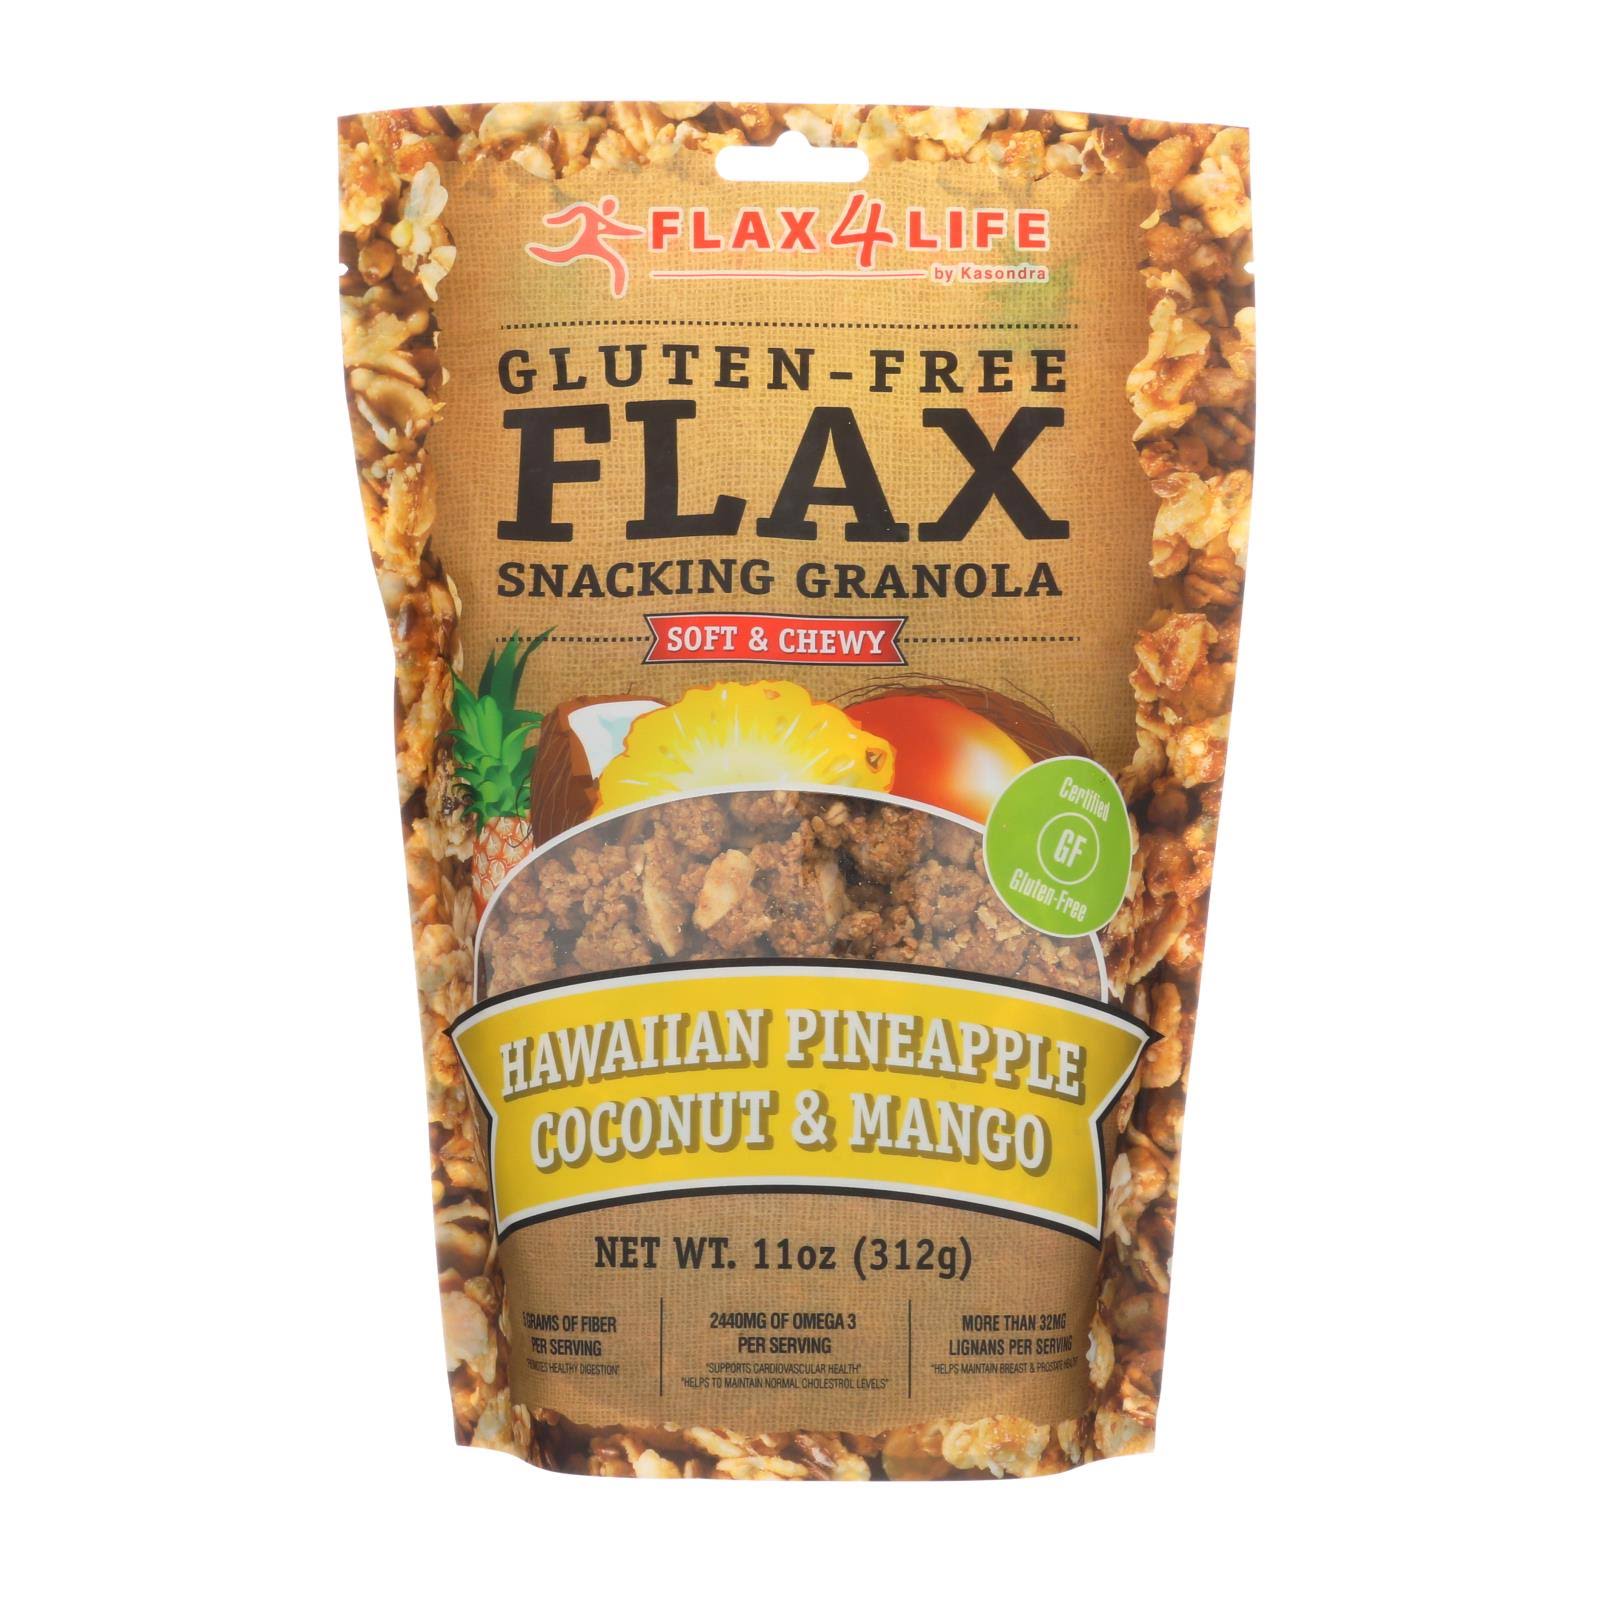 Flax4Life Gluten Free Flax Snacking Granola - Hawaiian Pineapple Coconut and Mango, 11oz